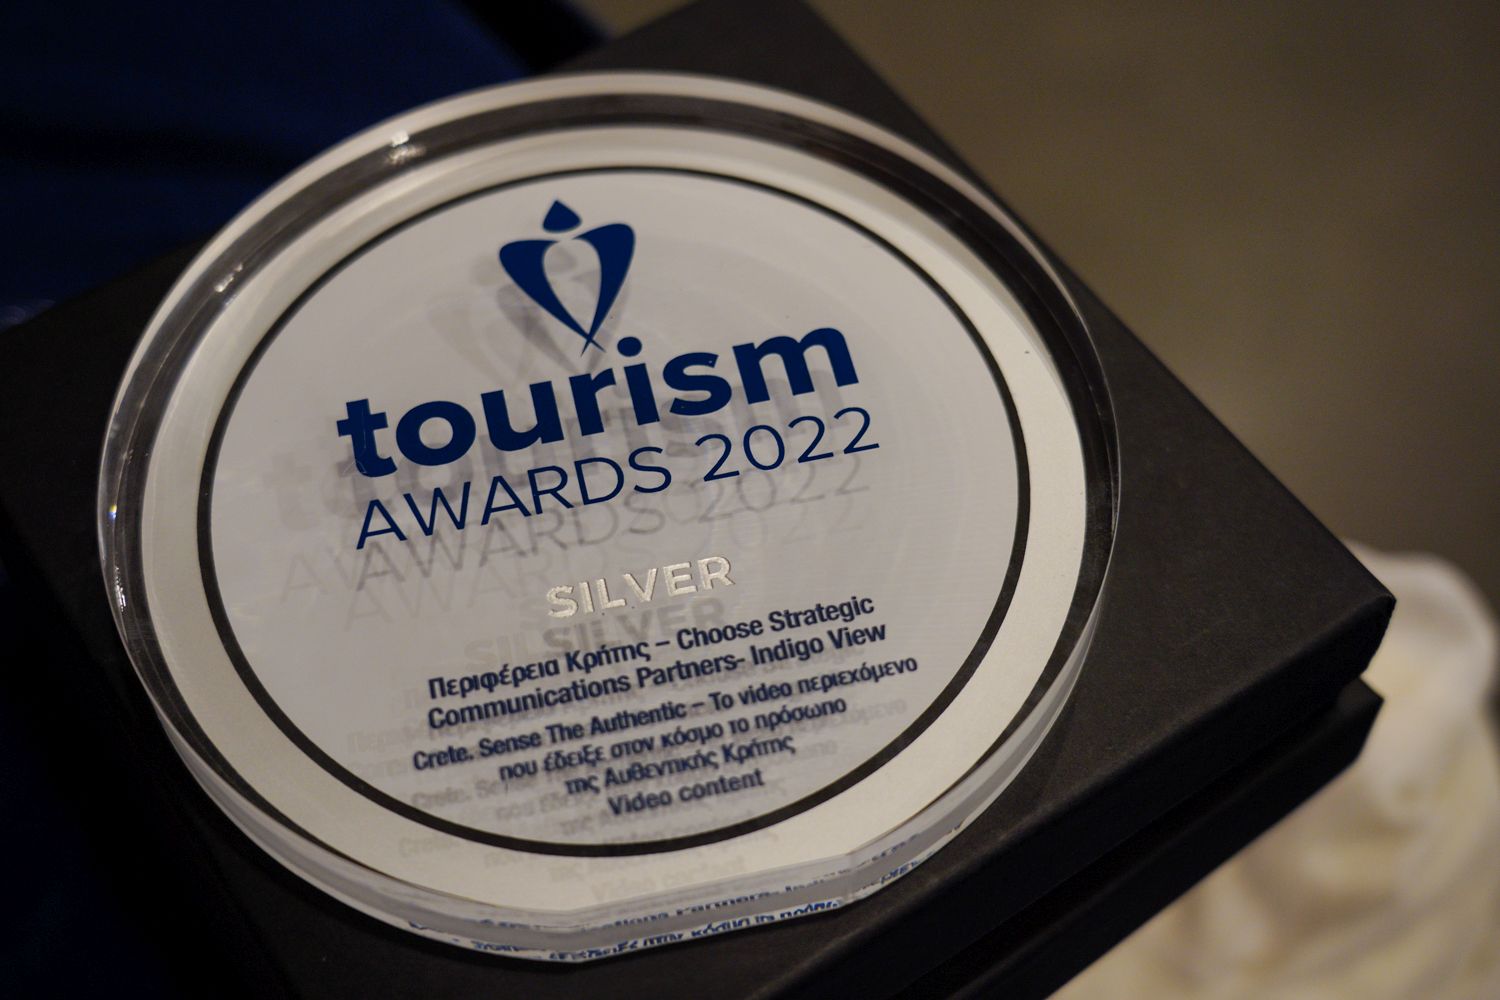 Tourism Awards 2022